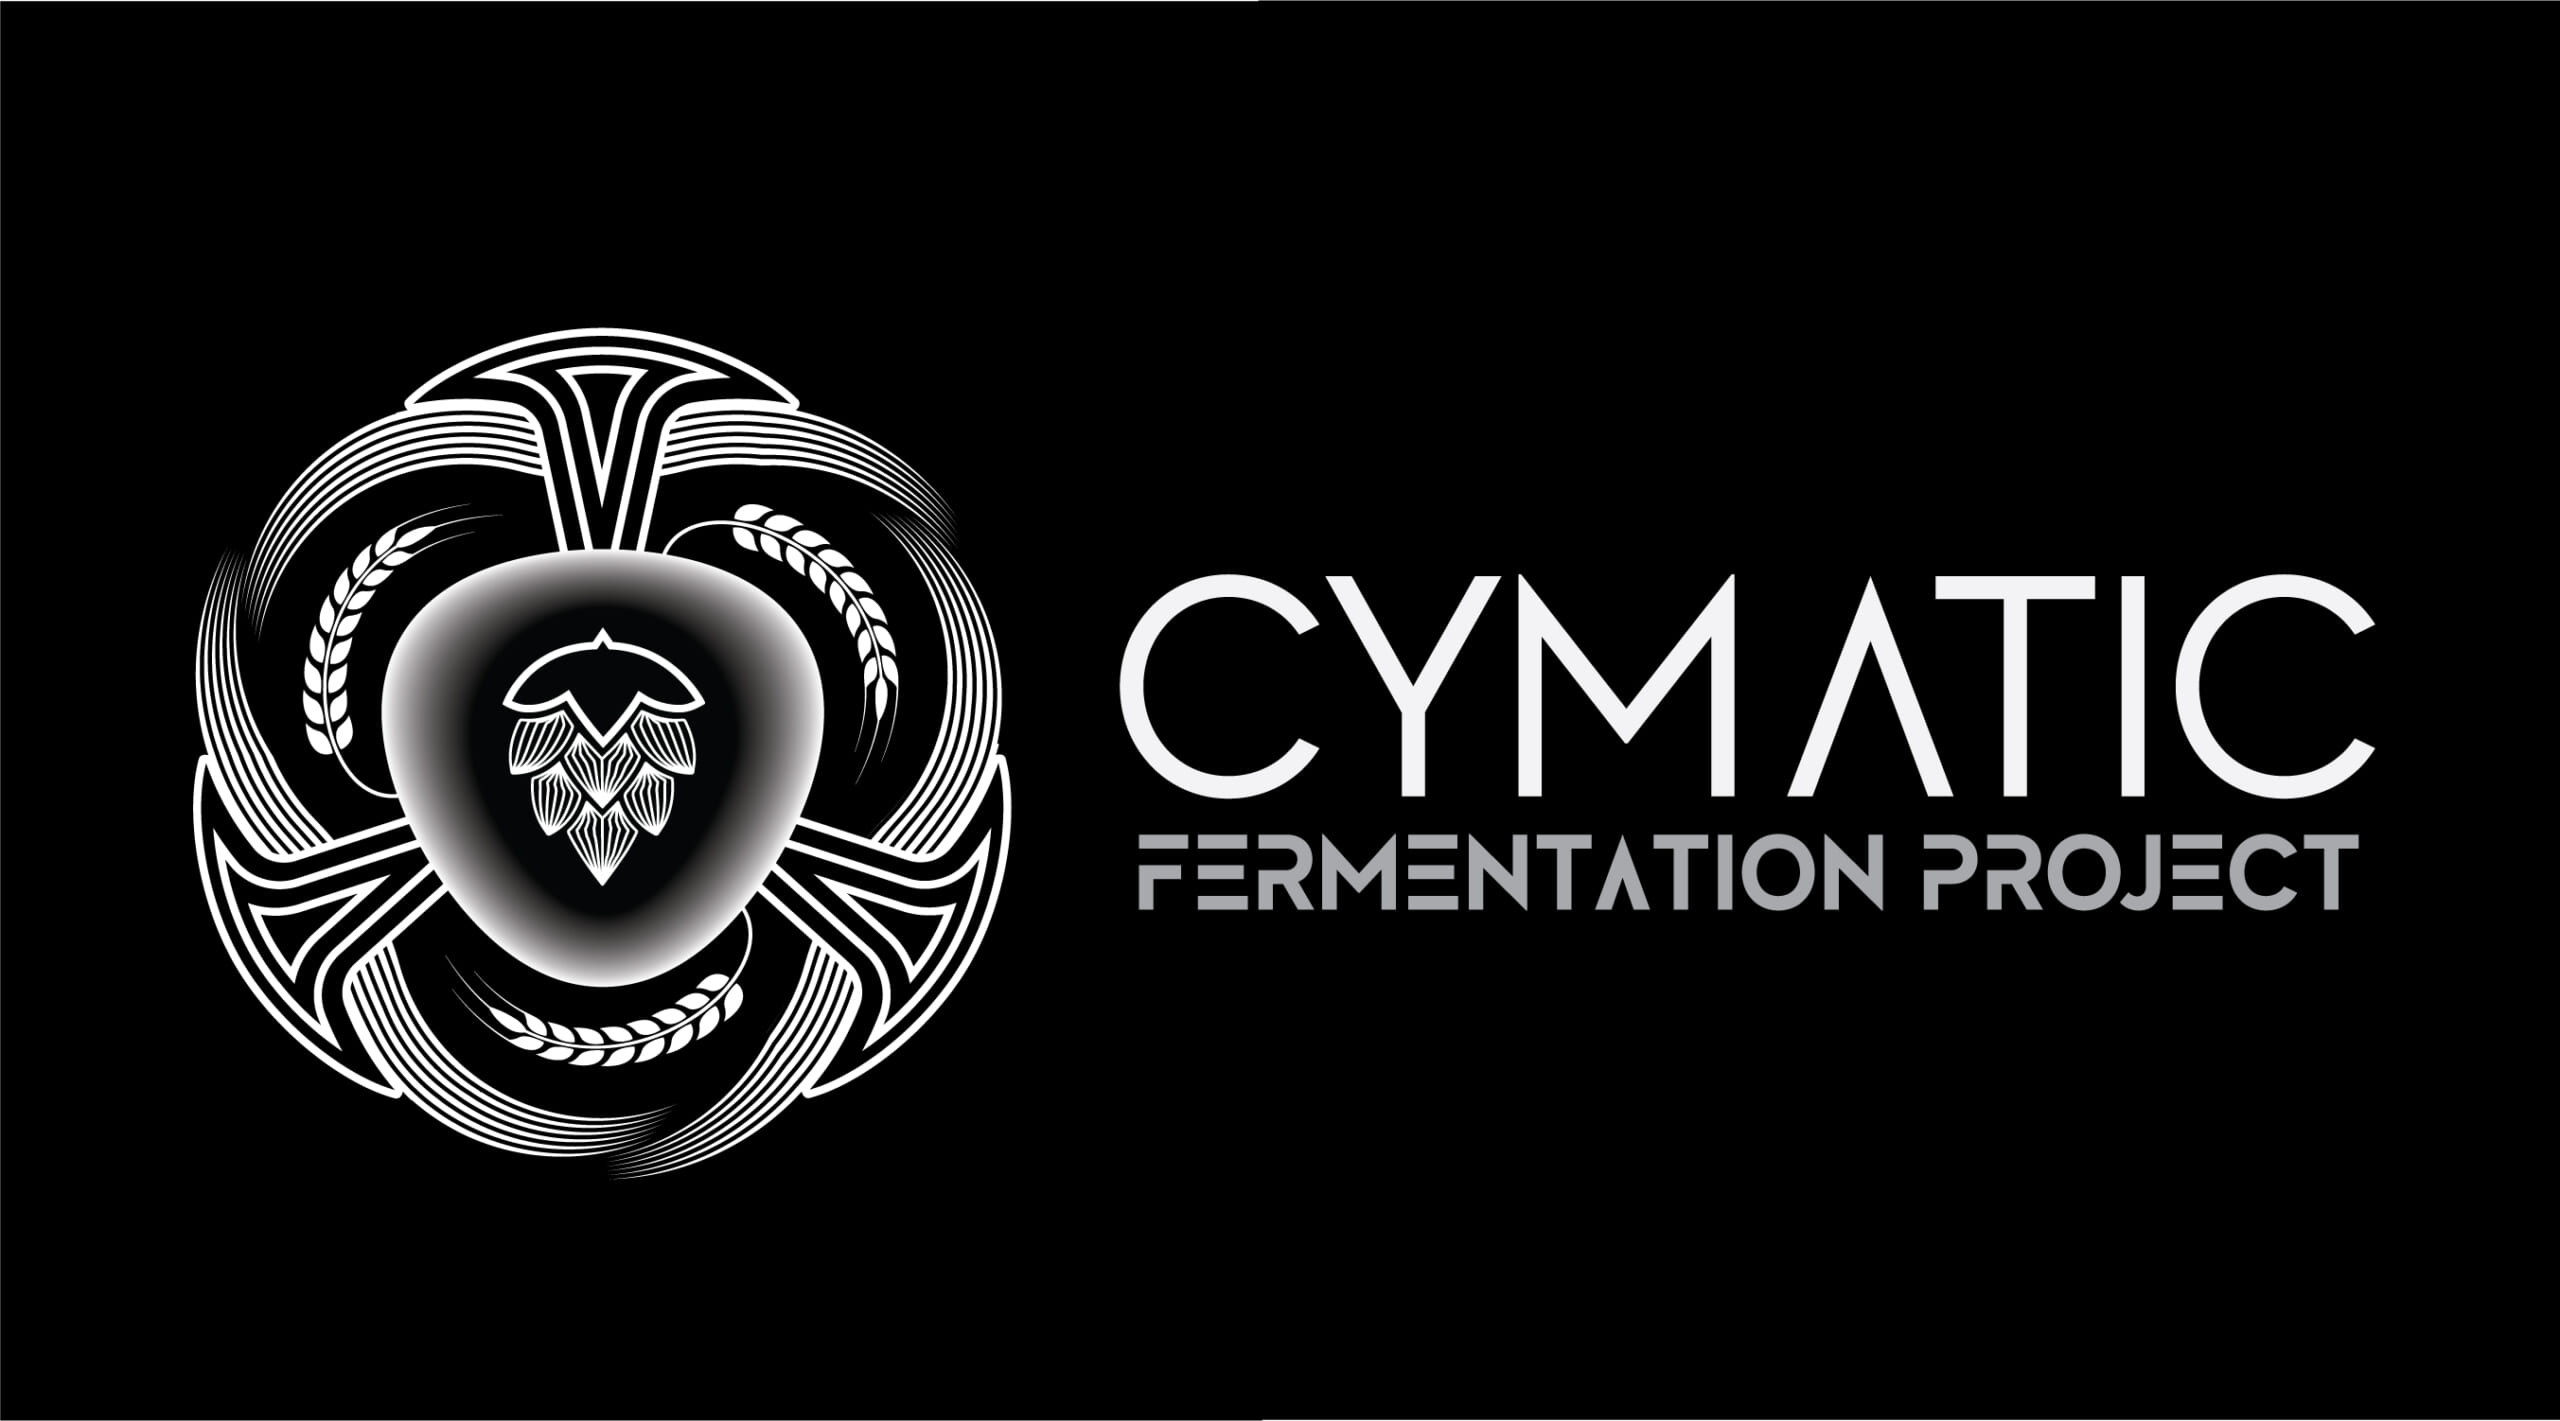 Cymatic Fermentation Project